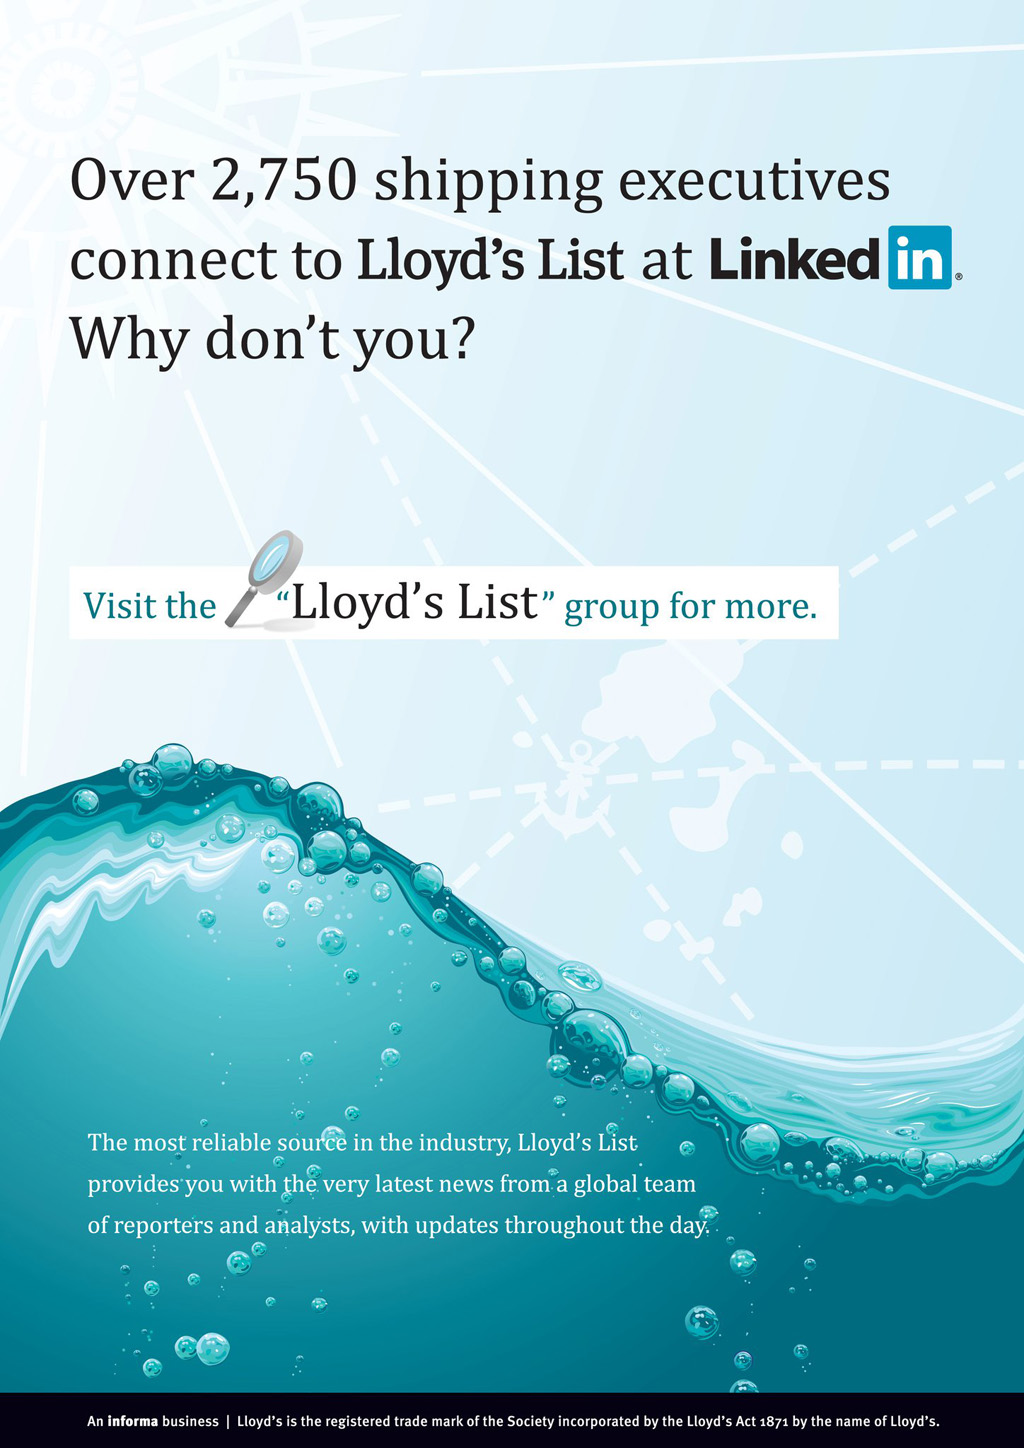 Social media launch, for Lloyds List